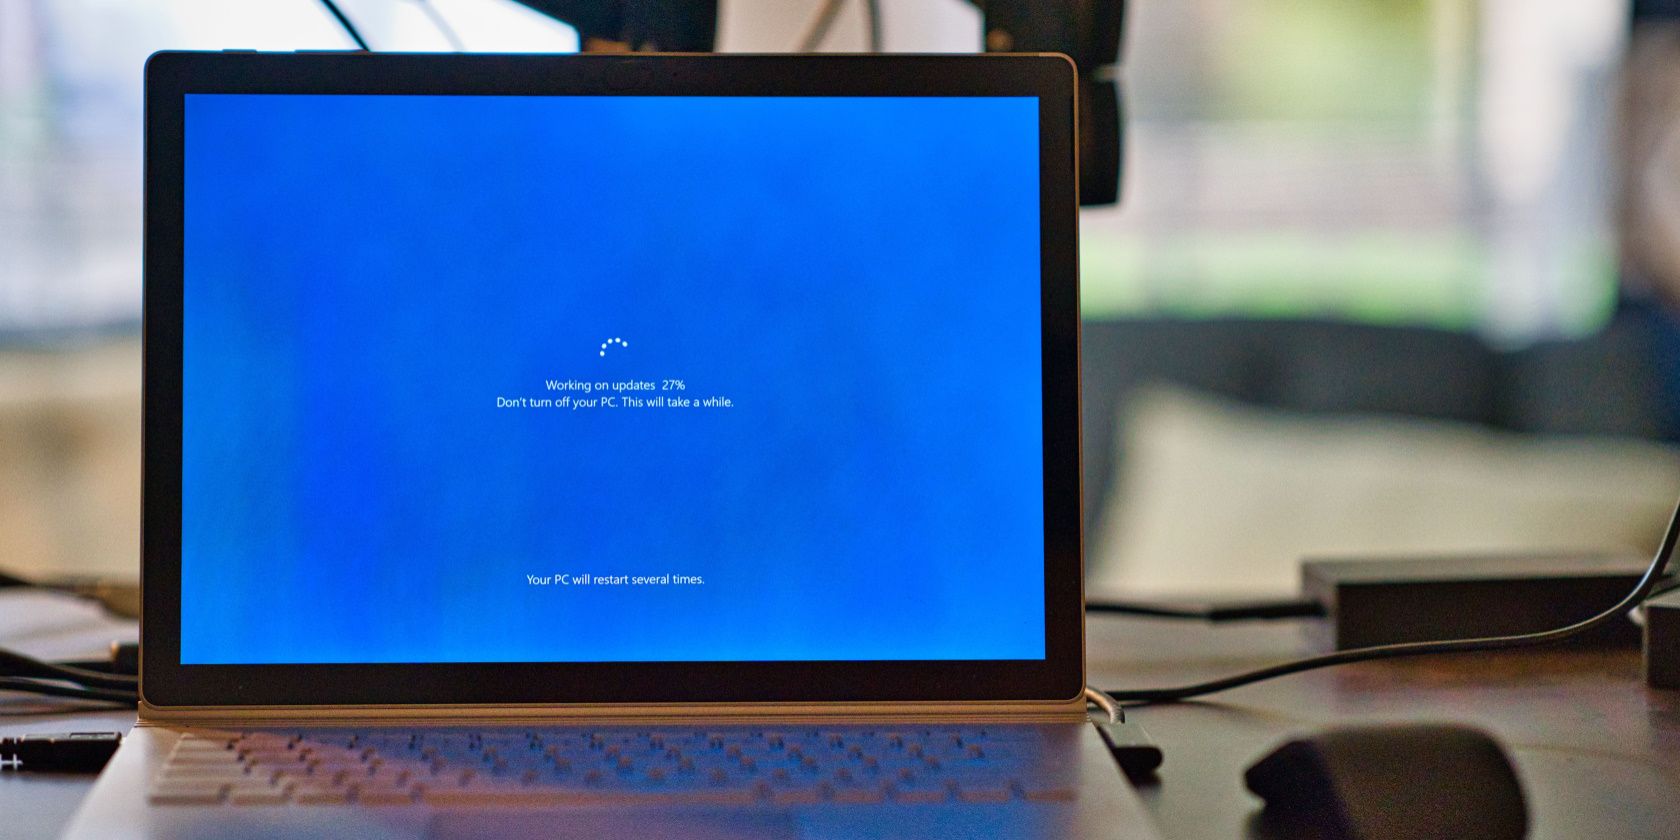 Installing Windows updates on a laptop